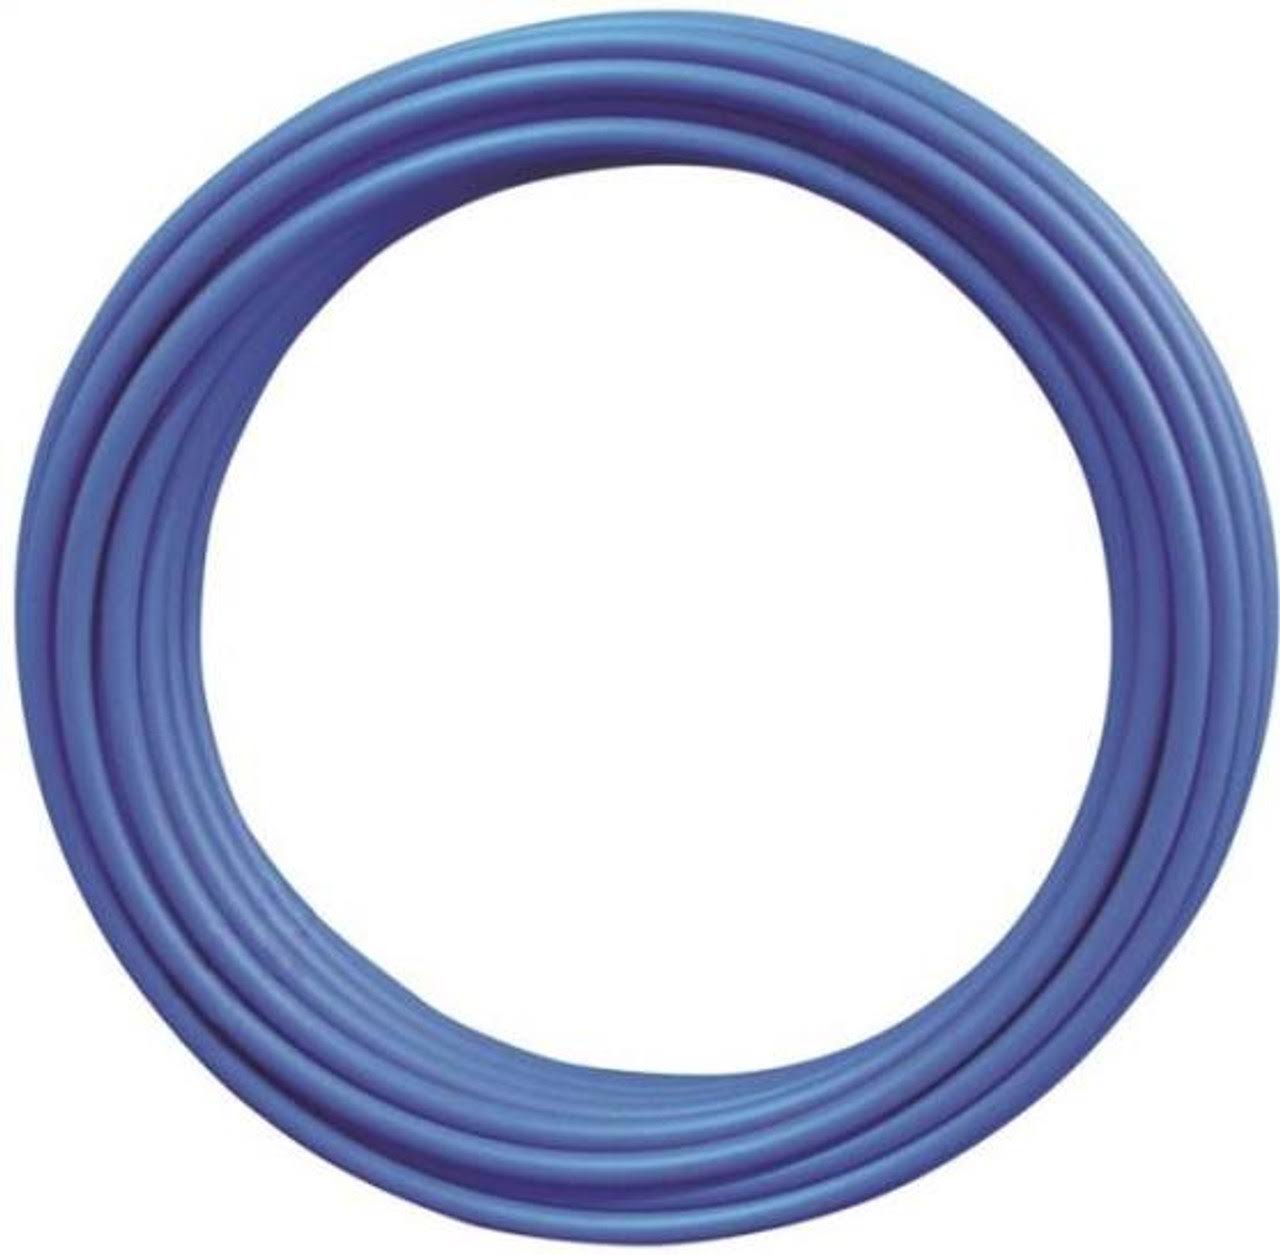 Conbraco Apollo Flexible Lightweight Pex Tubing - Blue, 3/4" x 100'